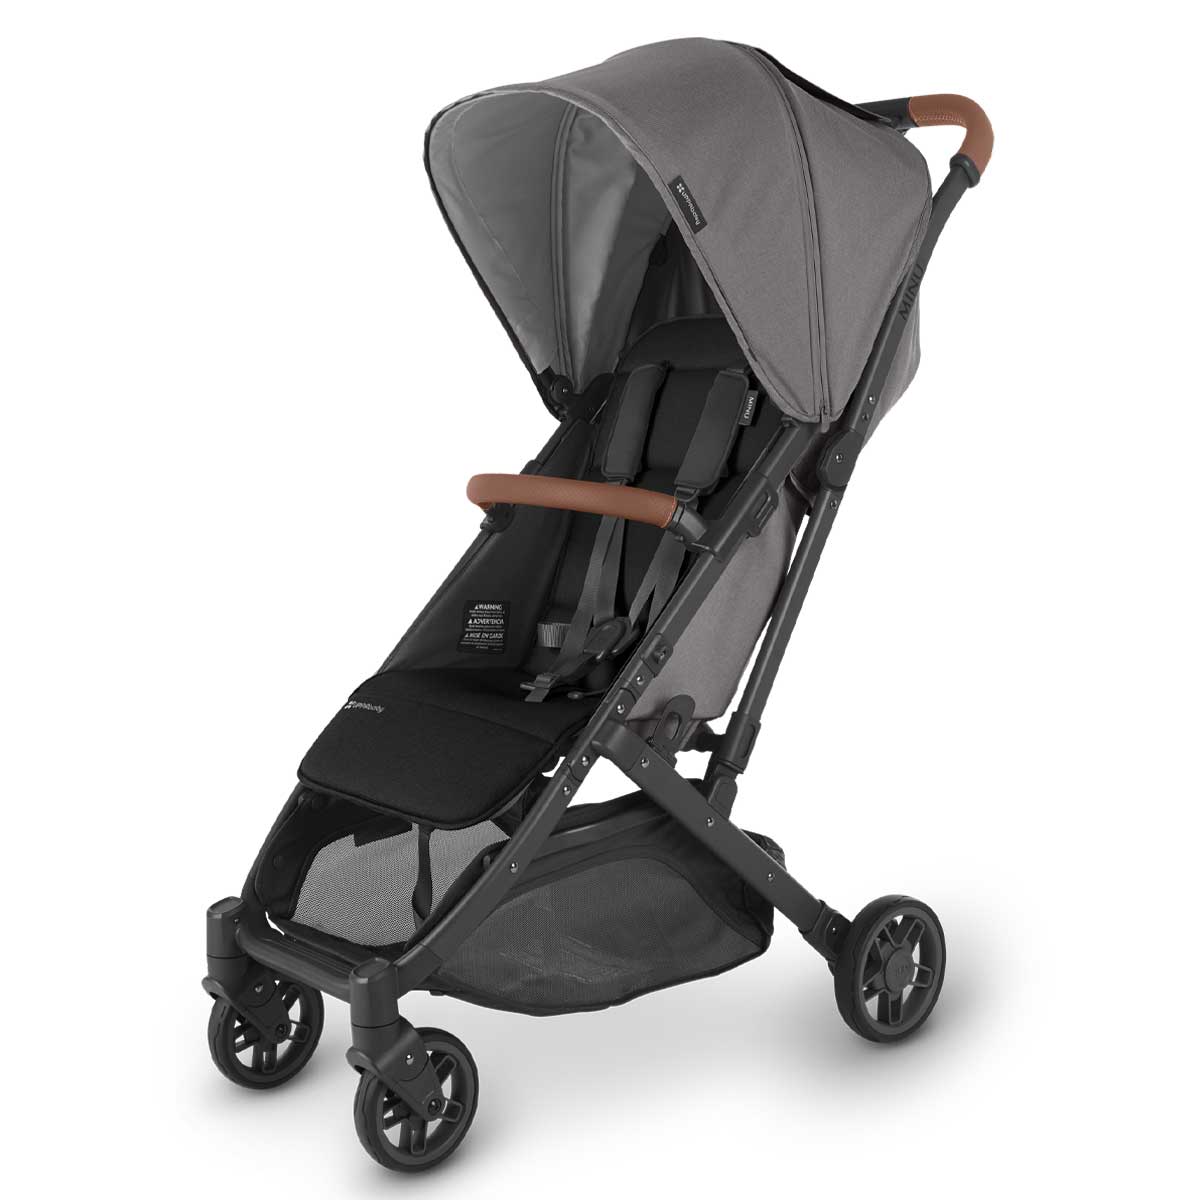 UPPAbaby compact stroller UPPAbaby MINU V2 Stroller - Greyson (Charcoal Melange/Carbon/Saddle Leather)